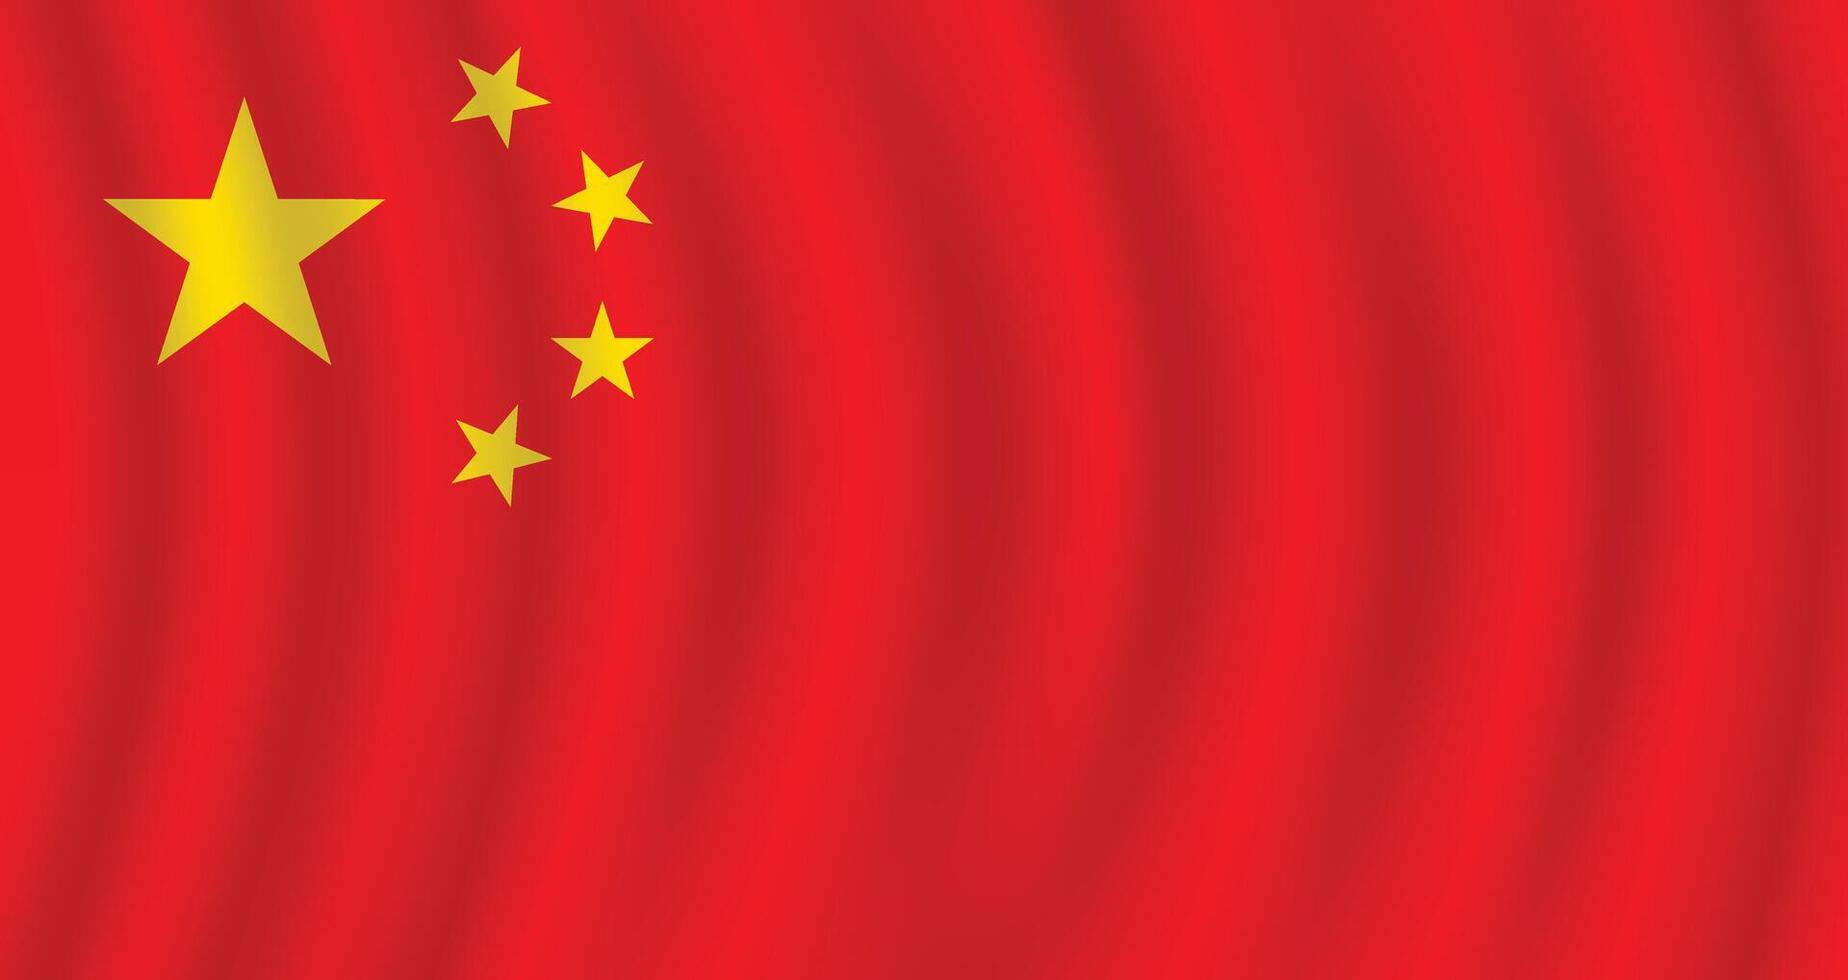 vlak illustratie van Chinese vlag. China nationaal vlag ontwerp. China Golf vlag. vector